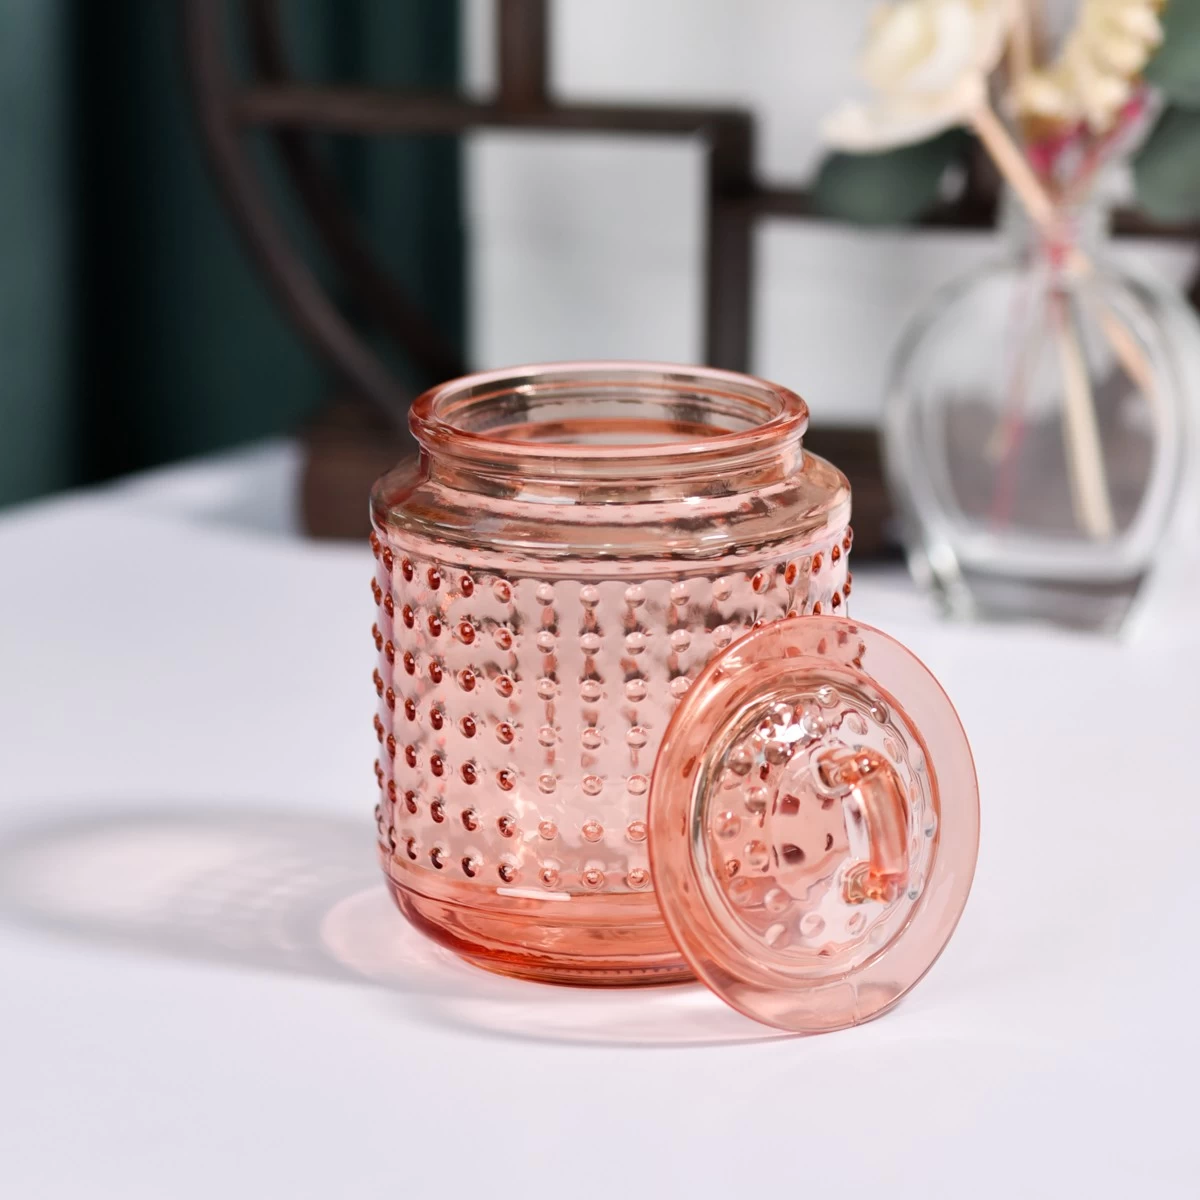 Pasadyang orange spot glass candle jar na may lids wholesaler